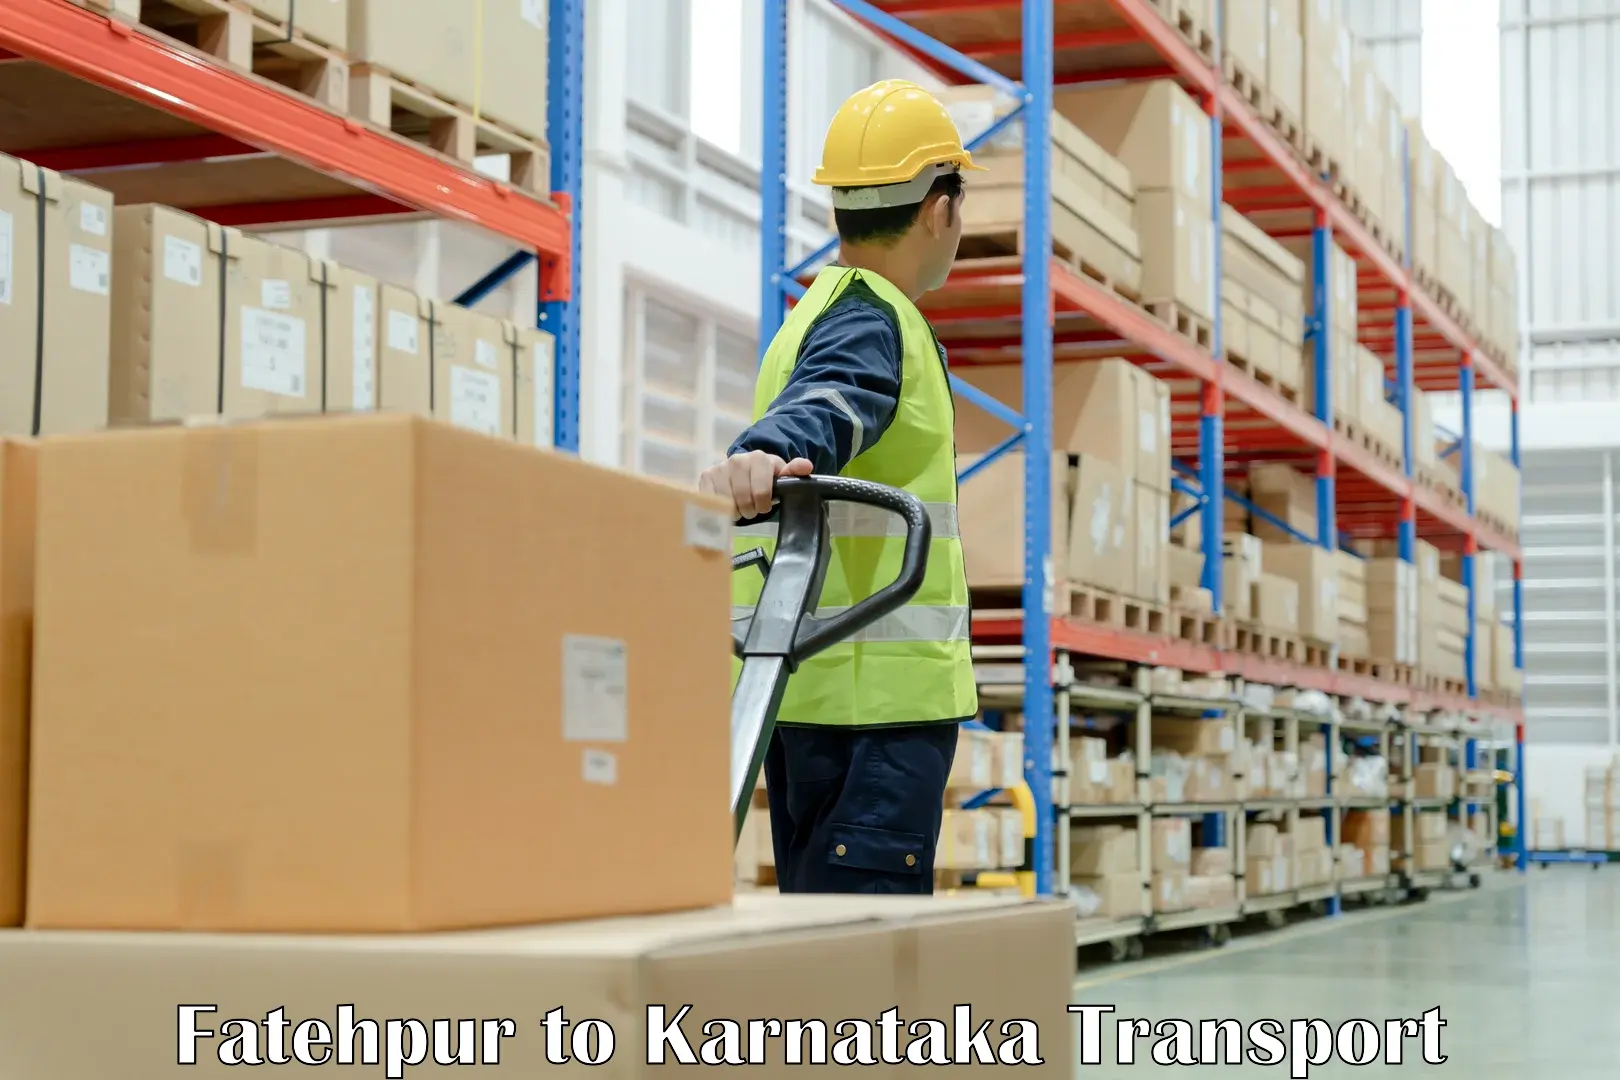 Furniture transport service Fatehpur to Karnataka